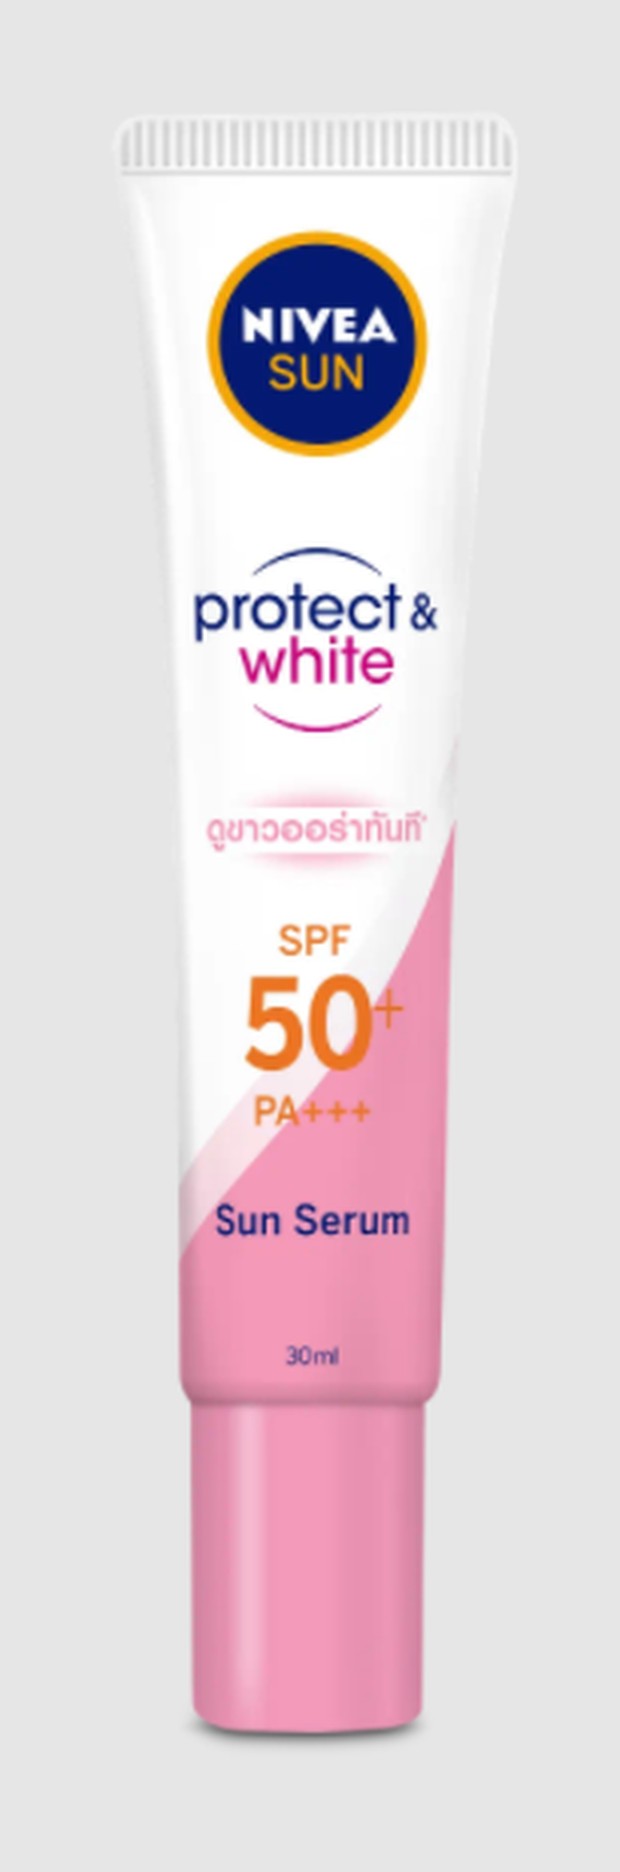 Nivea Sun Protect & White Instant Aura SPF 50+ / foto: nivea.co.id